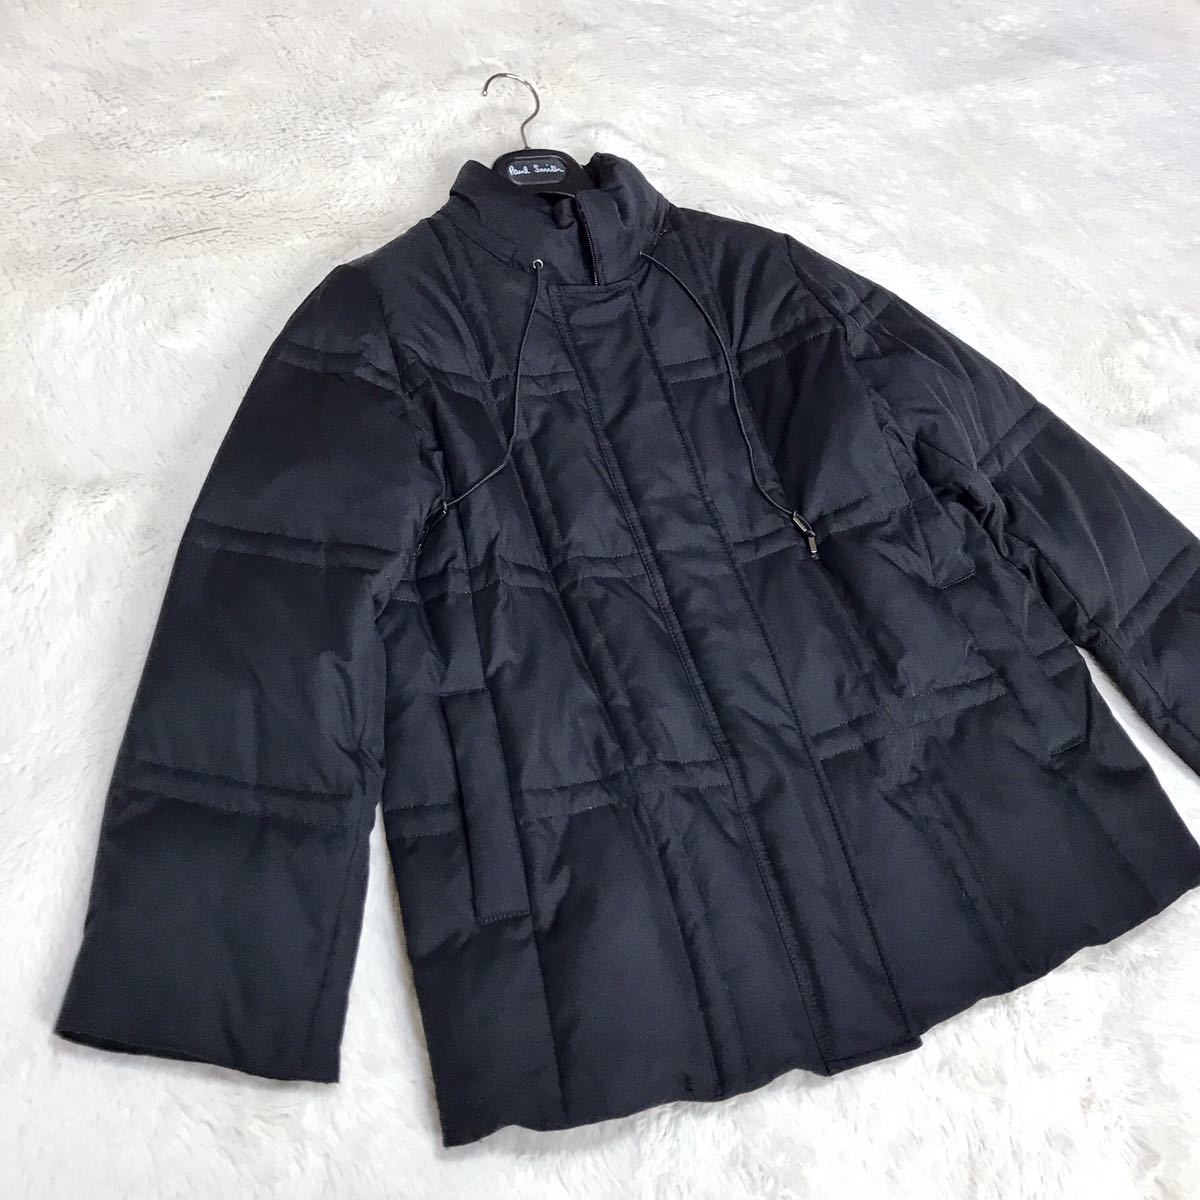  ultimate beautiful goods XL size BURBERRYnoba check down jacket blouson Burberry large size black black blouson 